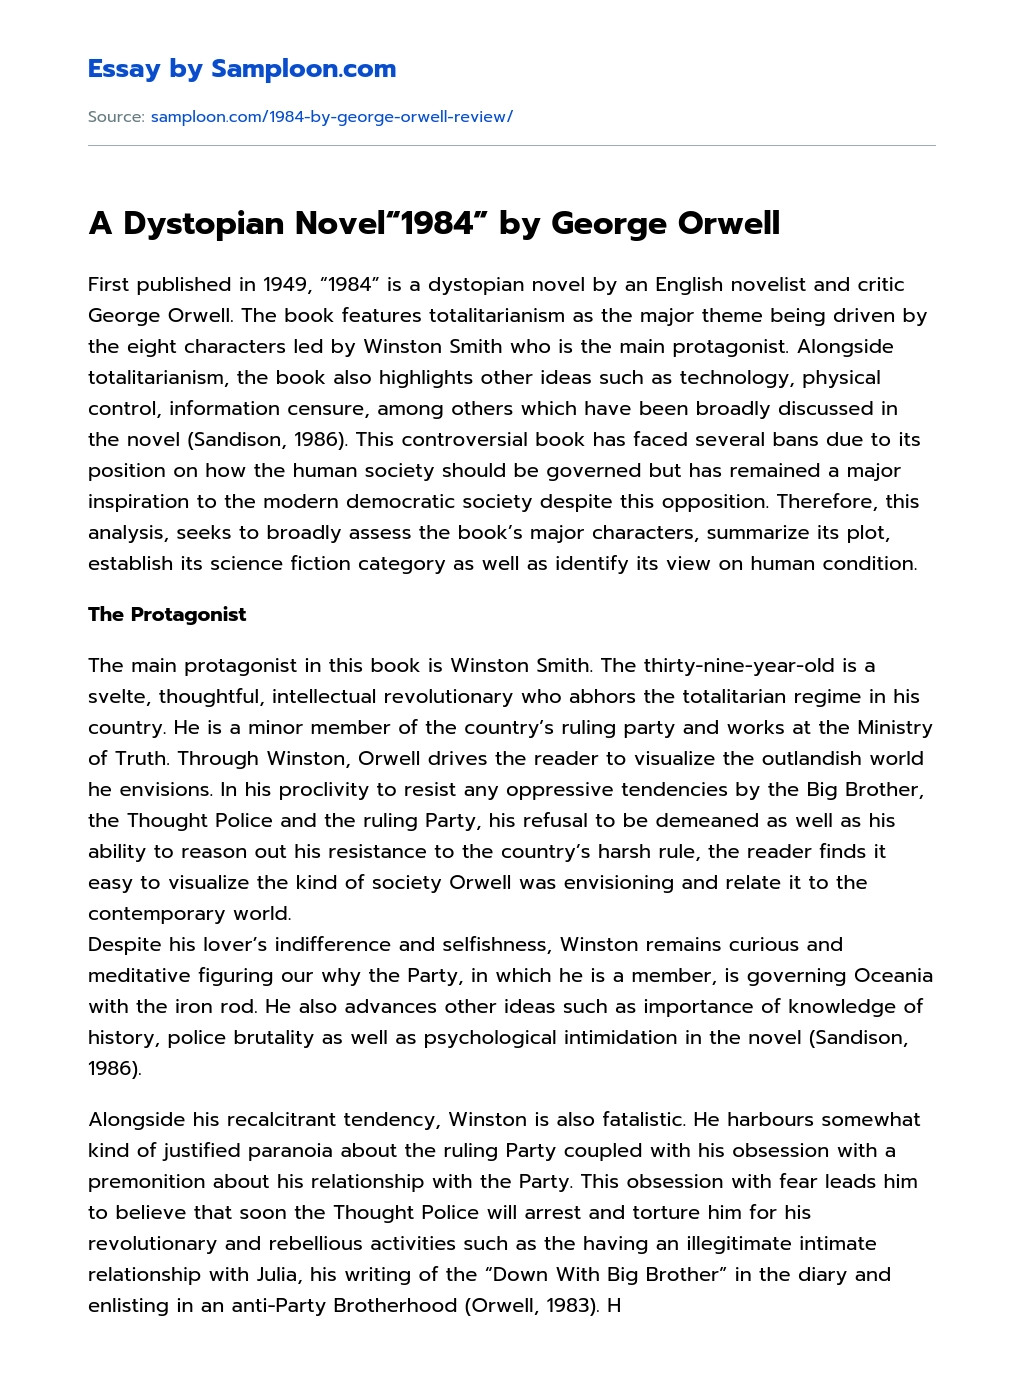 A Dystopian Novel“1984” by George Orwell Analytical Essay essay